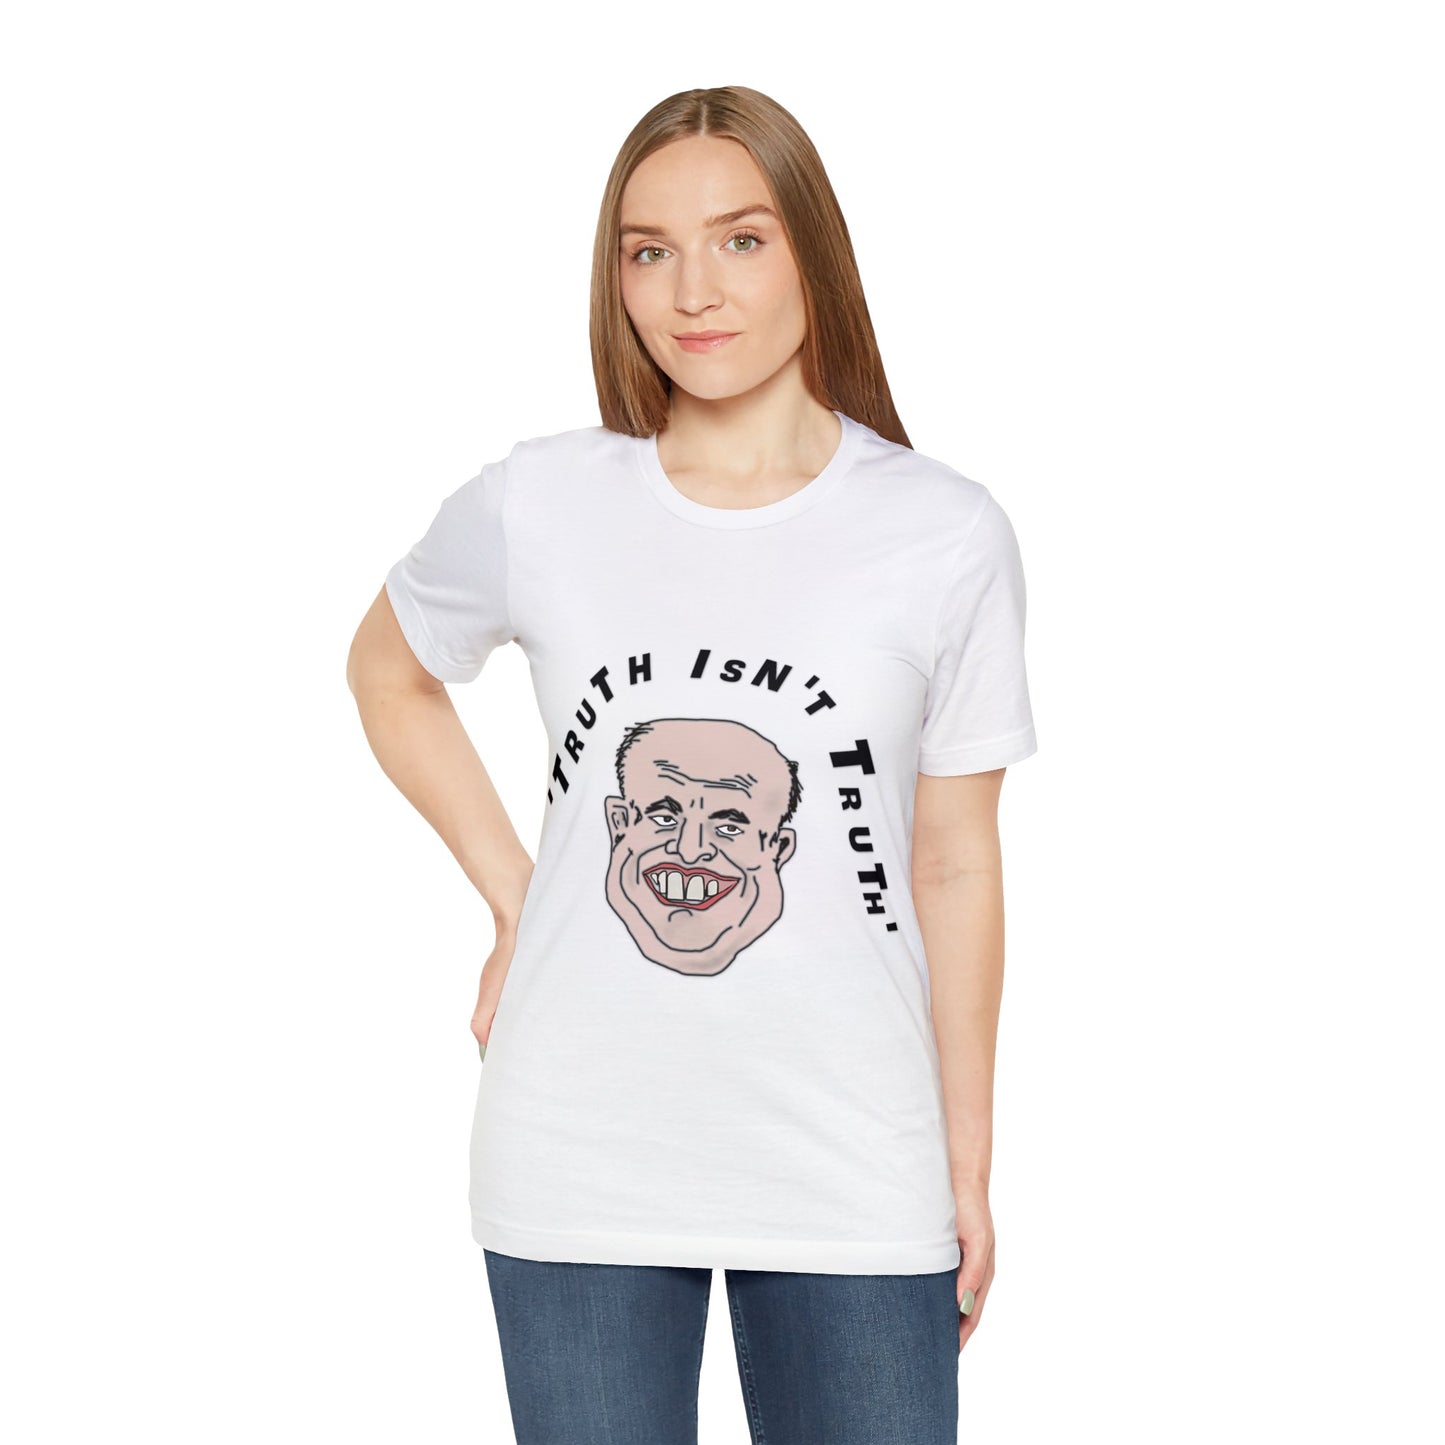 Rudy's Truth T-Shirt